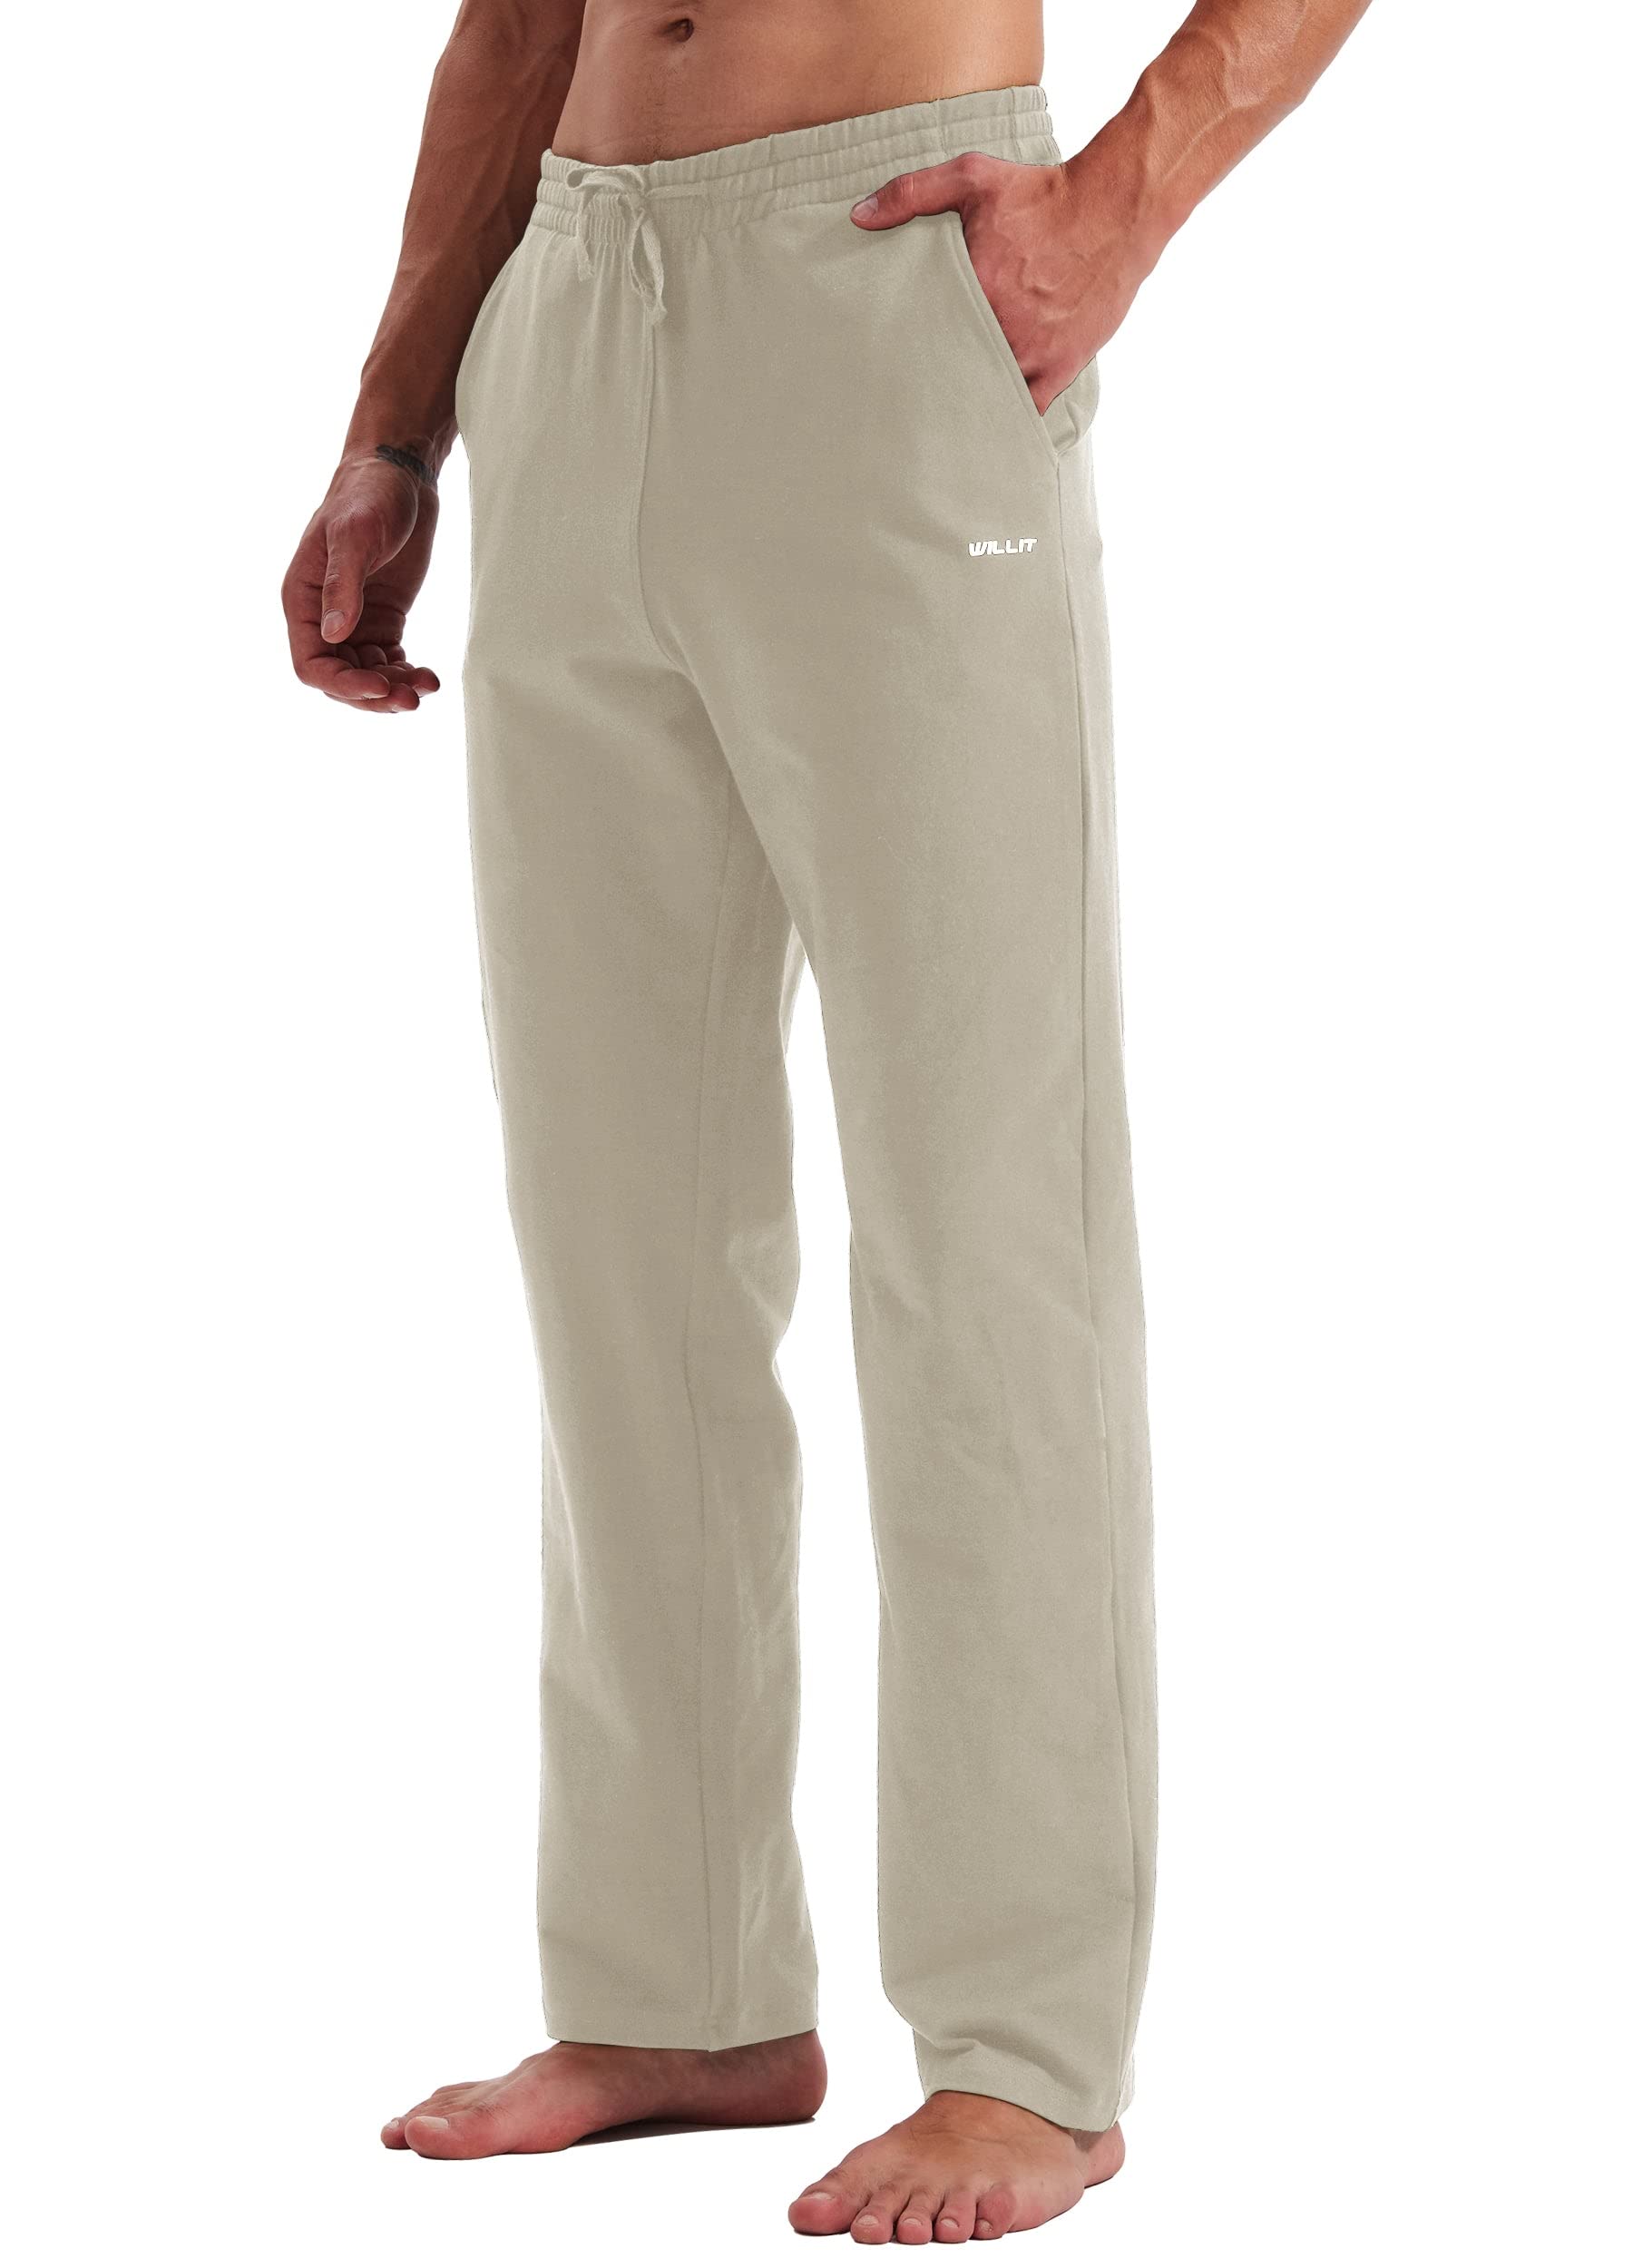 100% Organic Egyptian Cotton Lounge Pants or Yoga Pants for Men